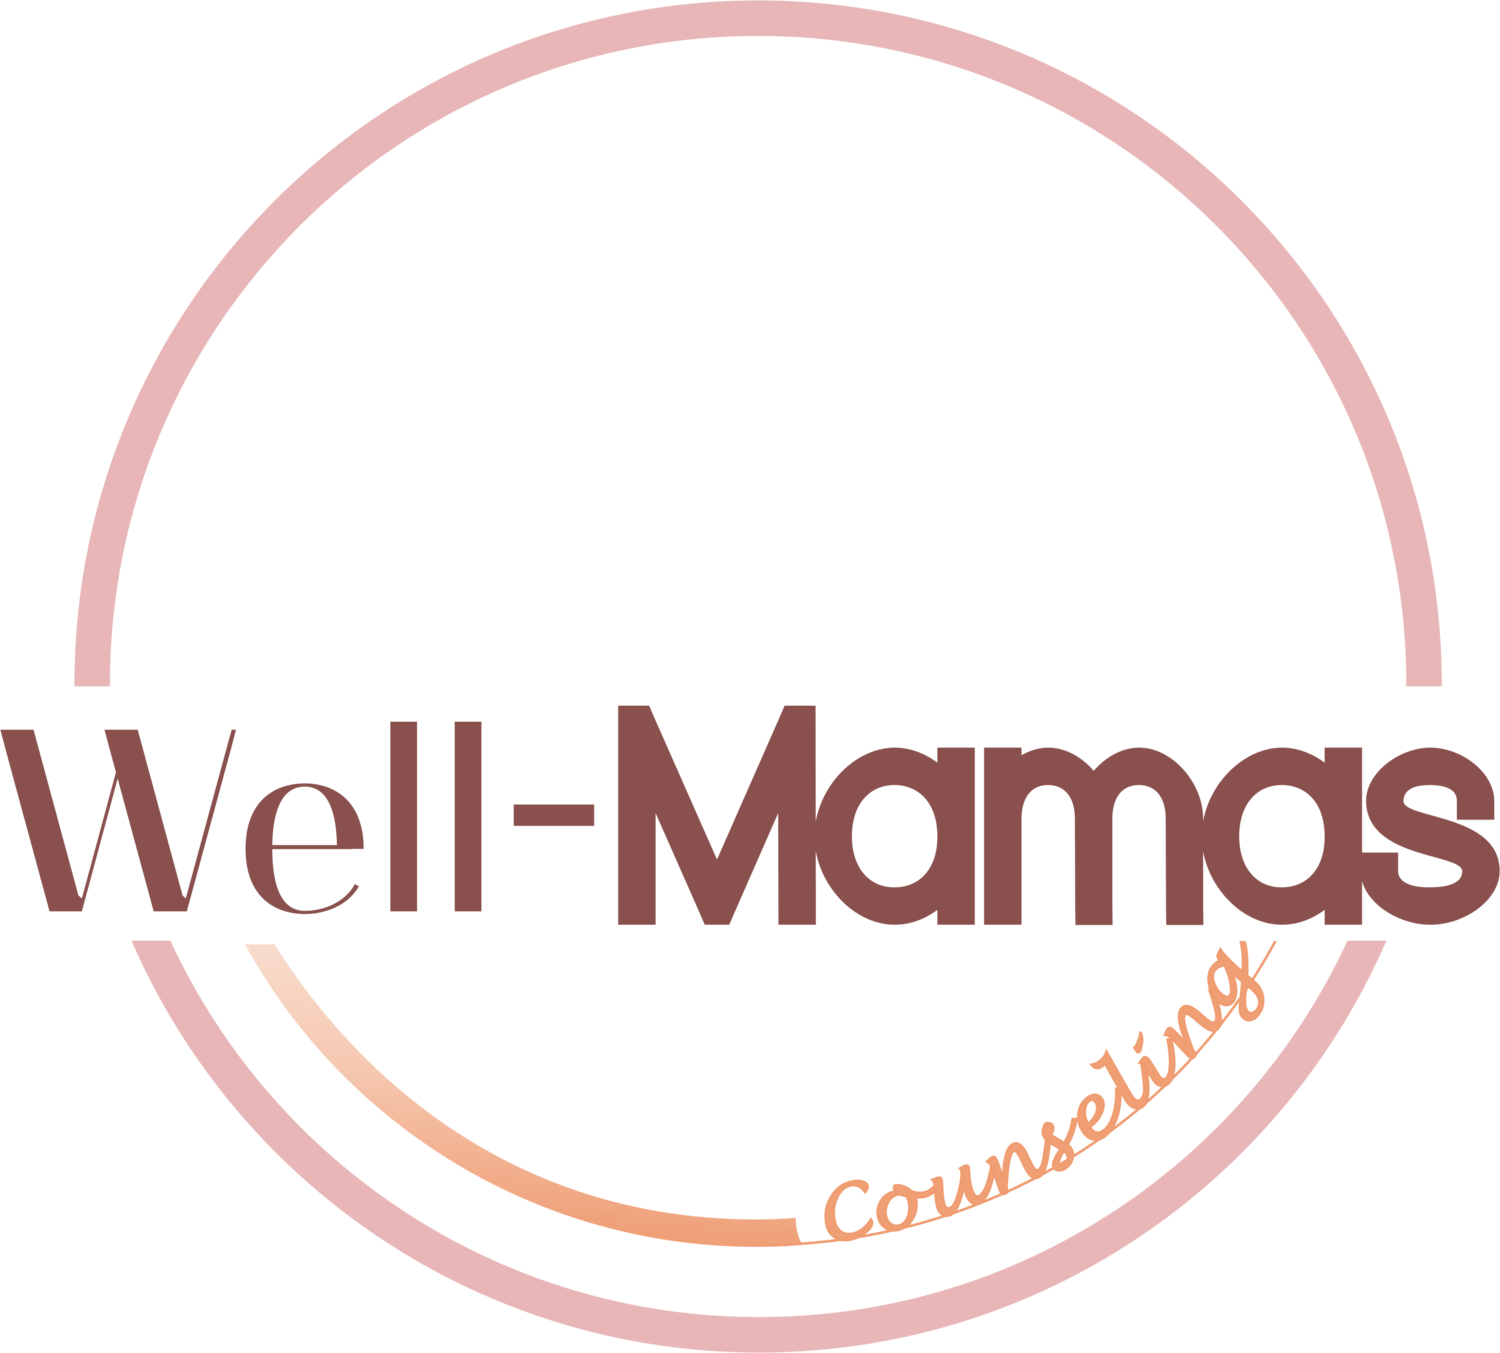 Well-Mamas Counseling